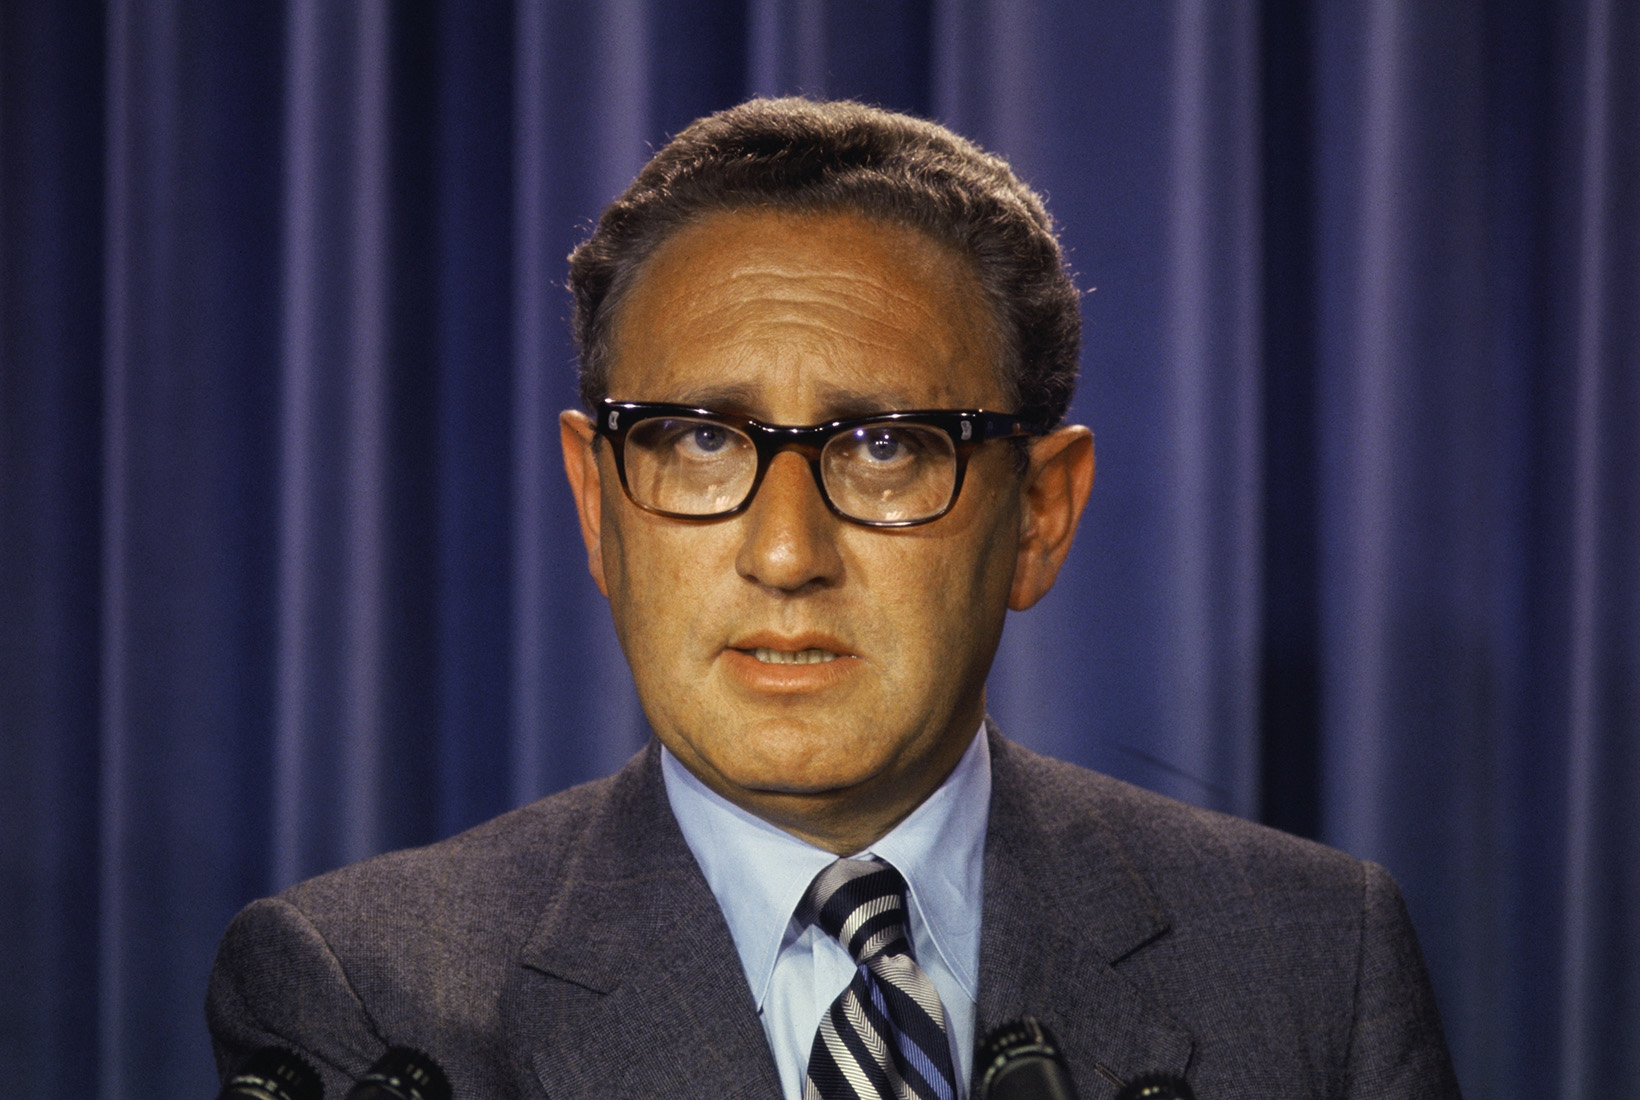 NextImg:How Henry Kissinger shaped the Cold War world